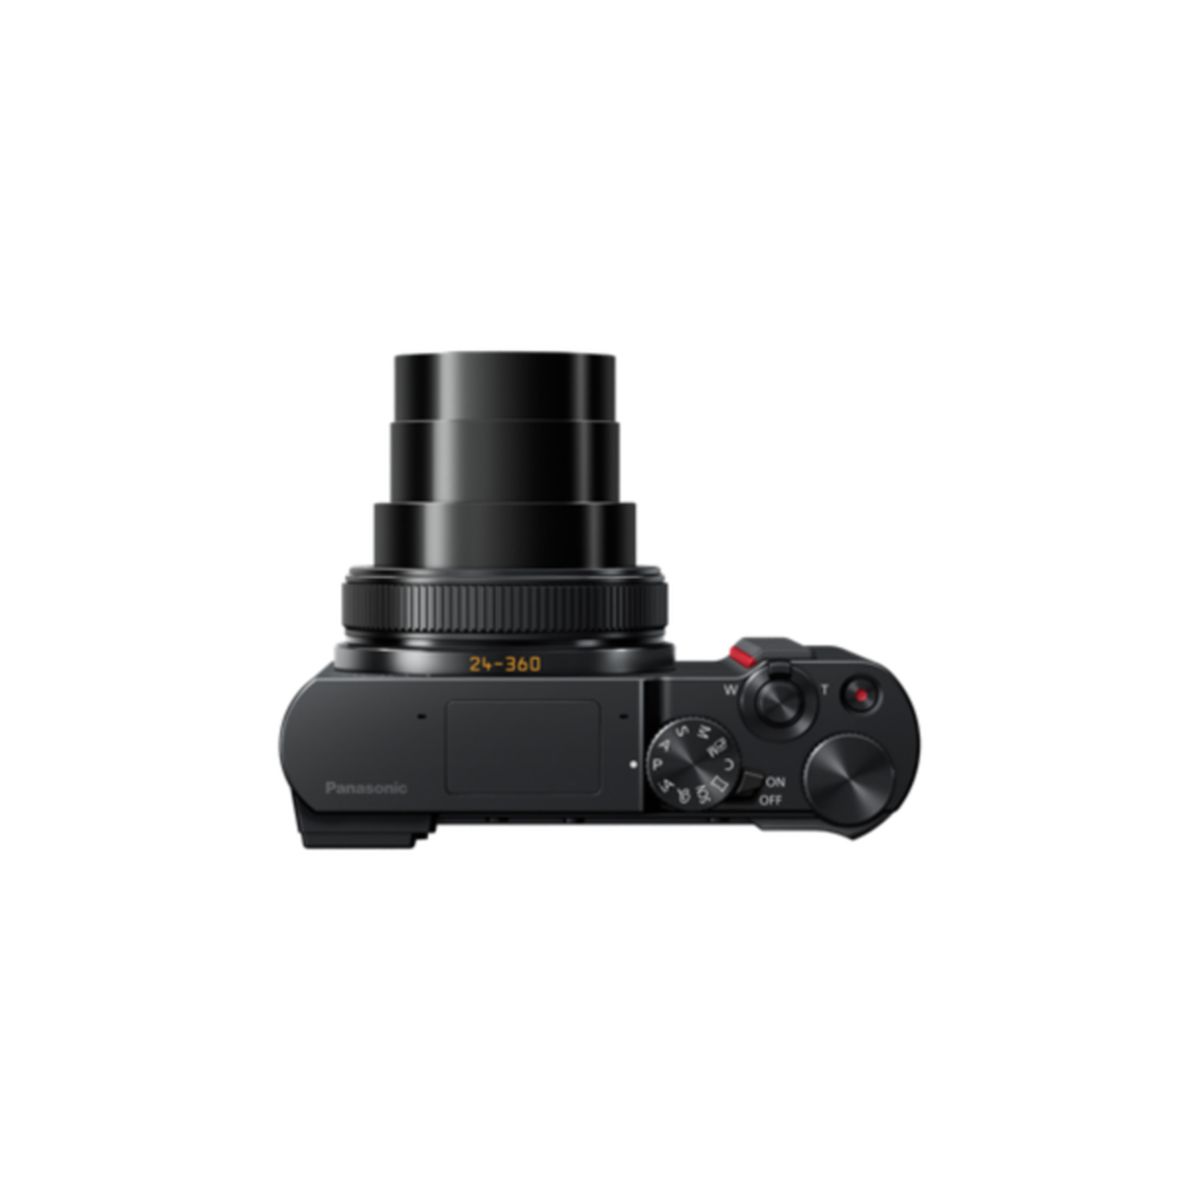 Panasonic DC-TZ202D schwarz Digital Kompaktkamera